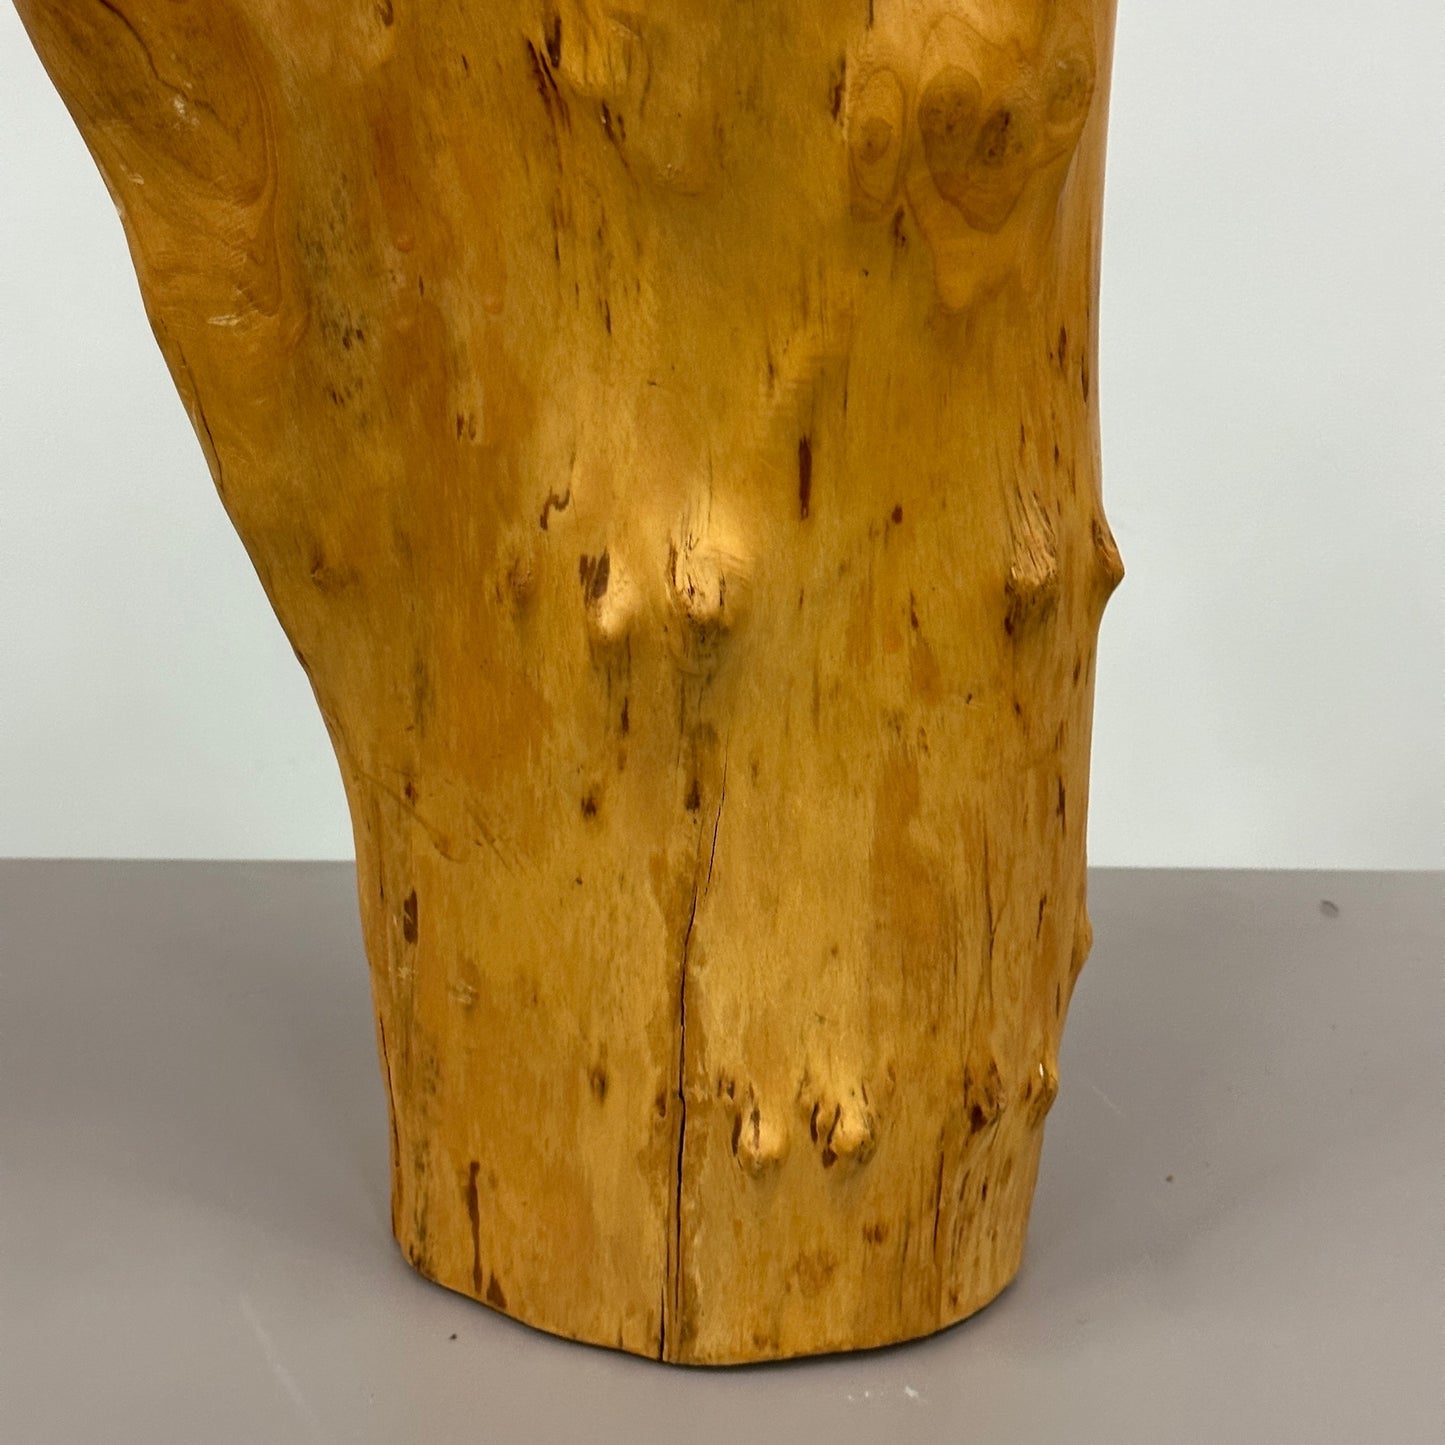 Large Wooden Vessel